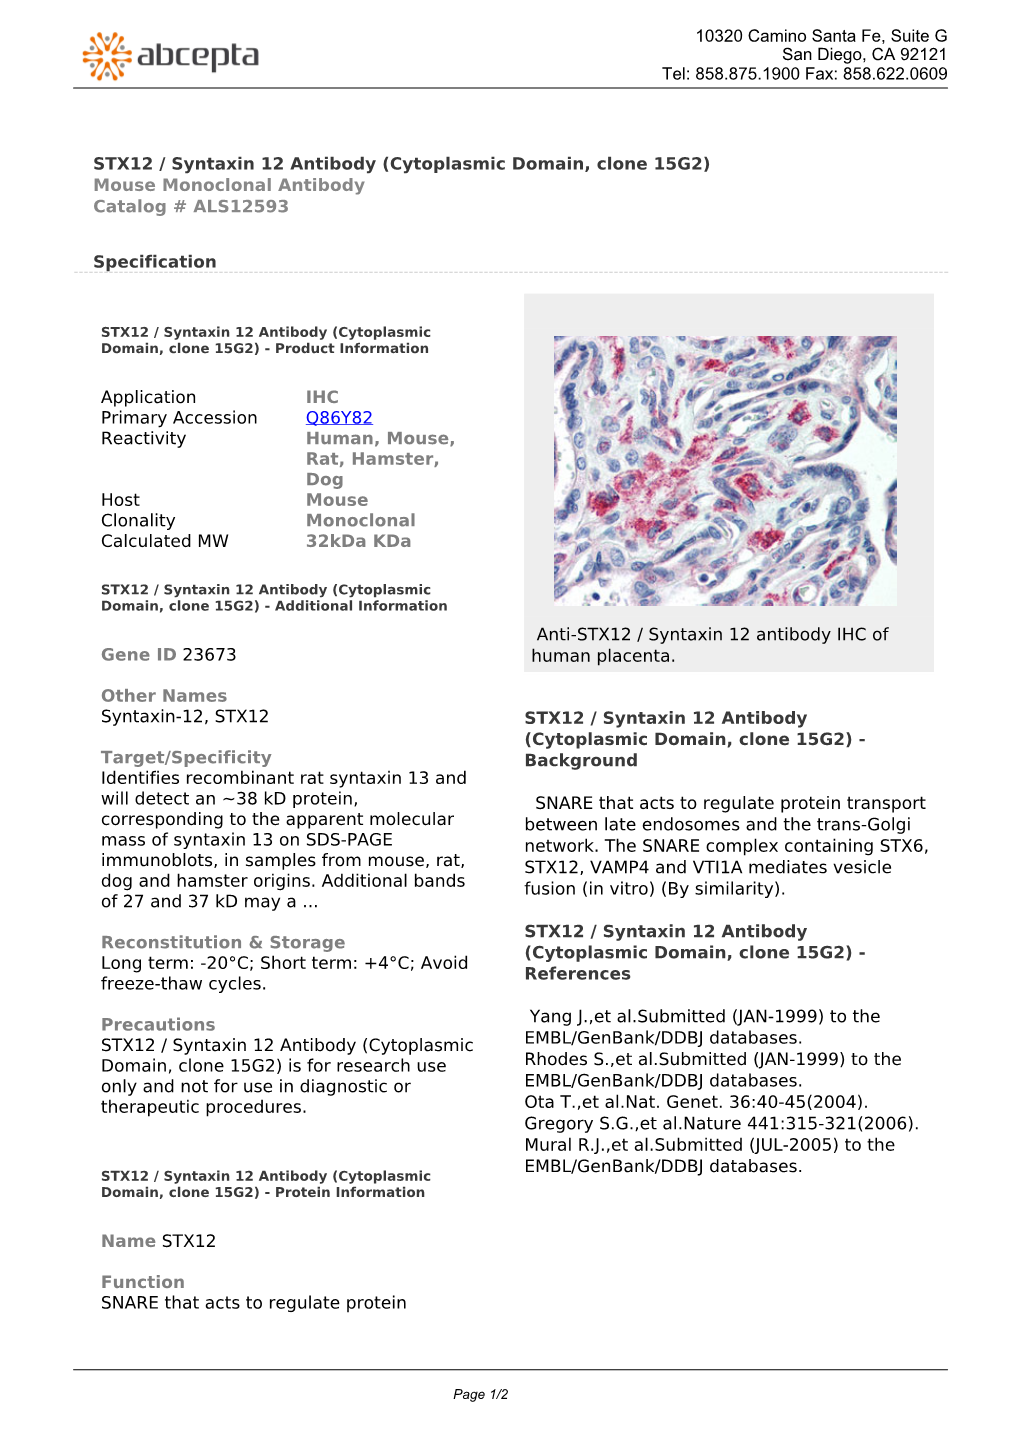 STX12 / Syntaxin 12 Antibody (Cytoplasmic Domain, Clone 15G2) Mouse Monoclonal Antibody Catalog # ALS12593